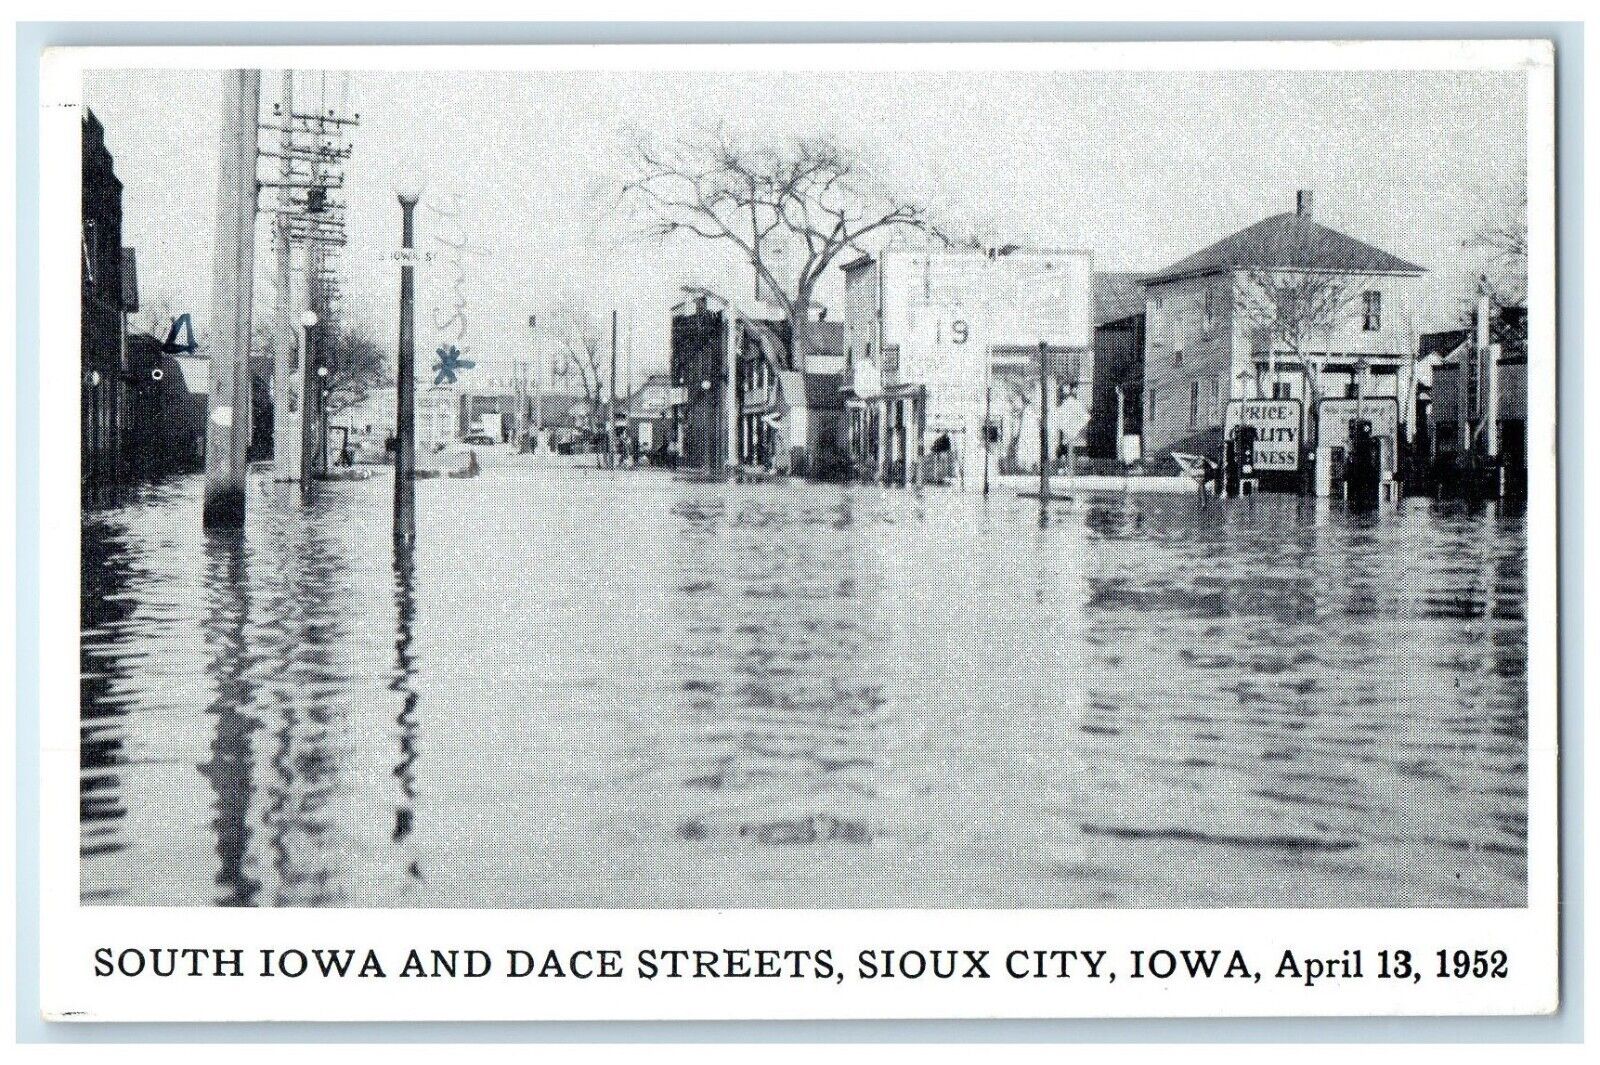 1952 South Iowa And Dace Streets Floods Sioux City Iowa IA Vintage Postcard